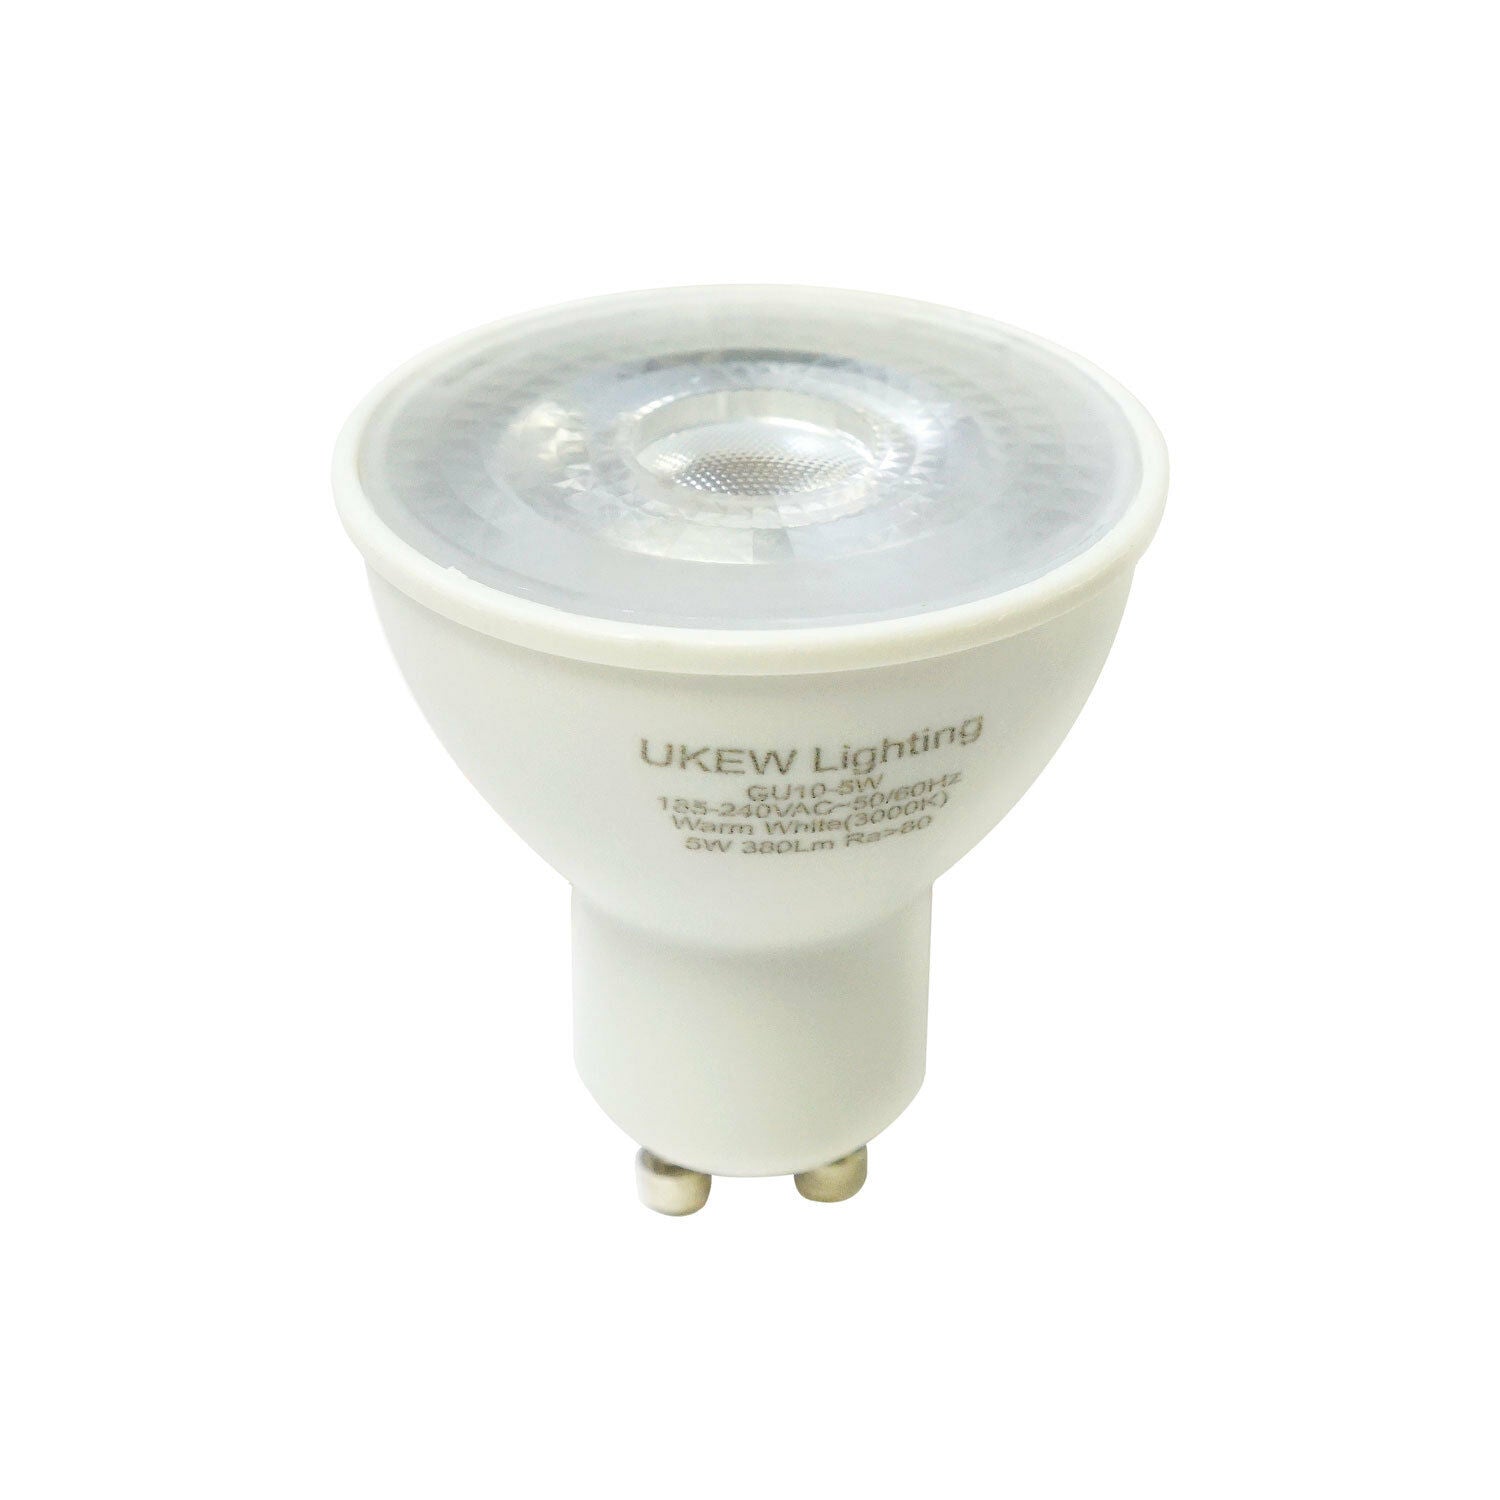 UKEW GU10 7W LED Bulb 500 LUMENS - Pack of 10 - 3000K Warm white freeshipping - Light fixtures UK